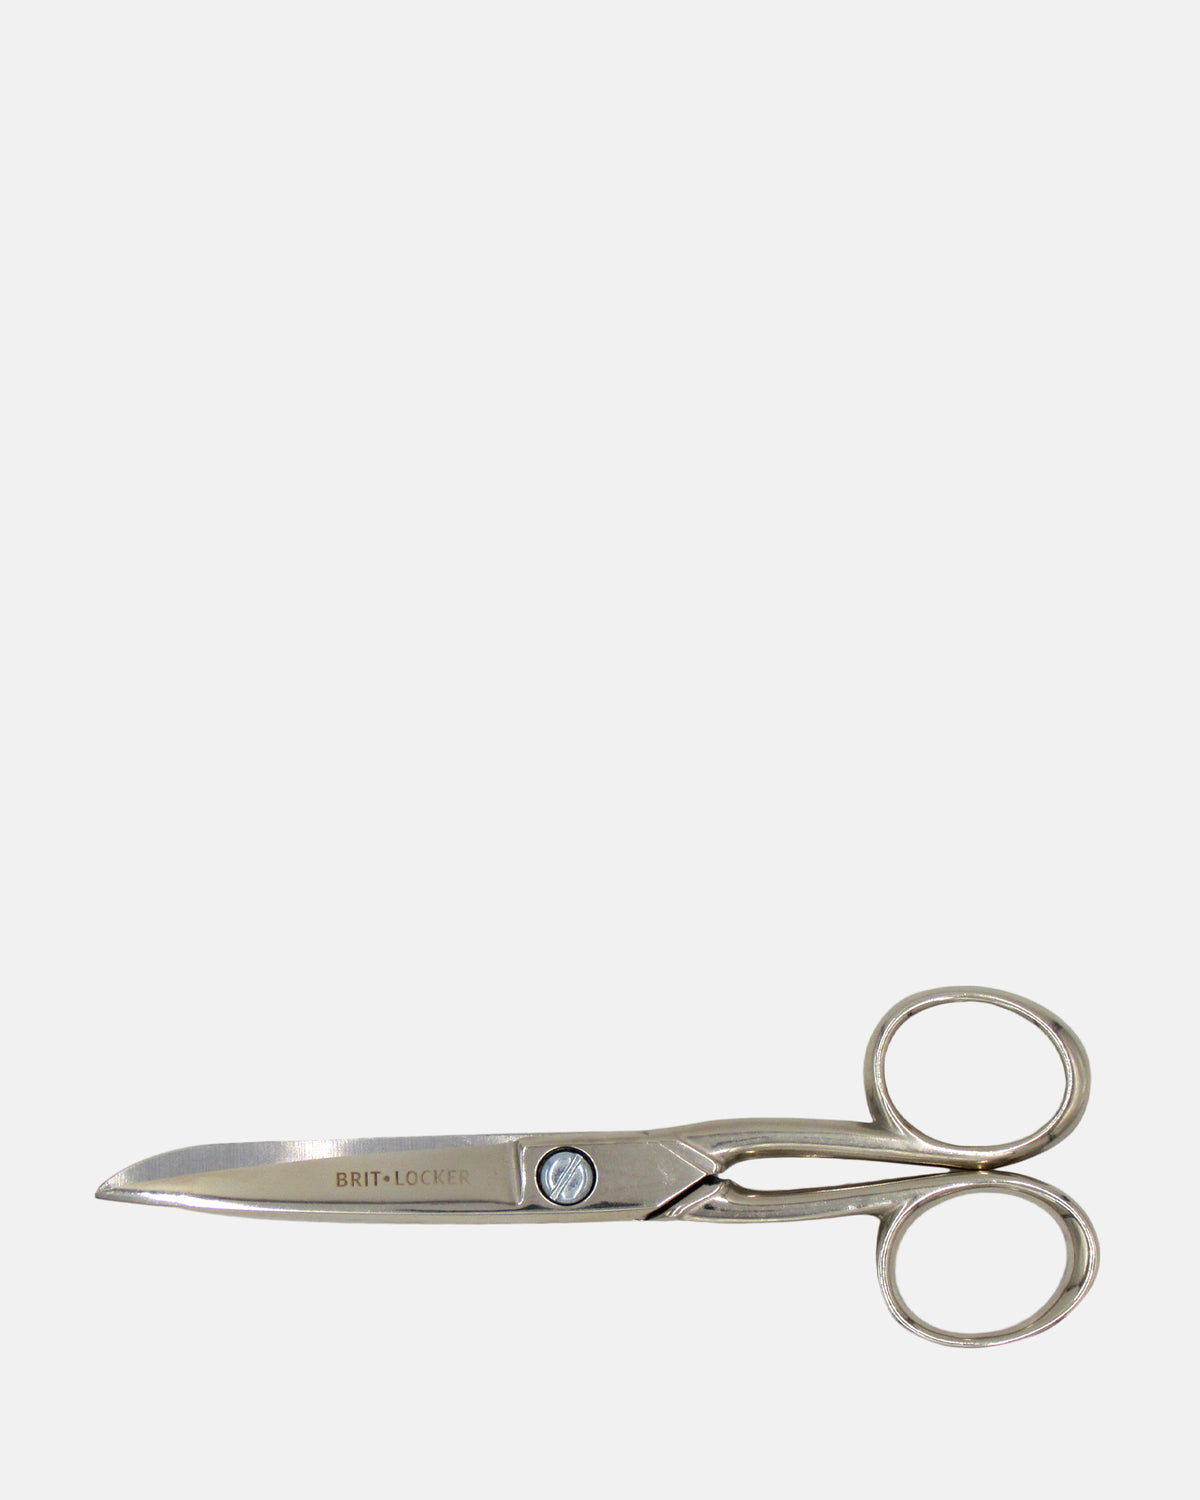 5 Inch Multi-Use Scissors